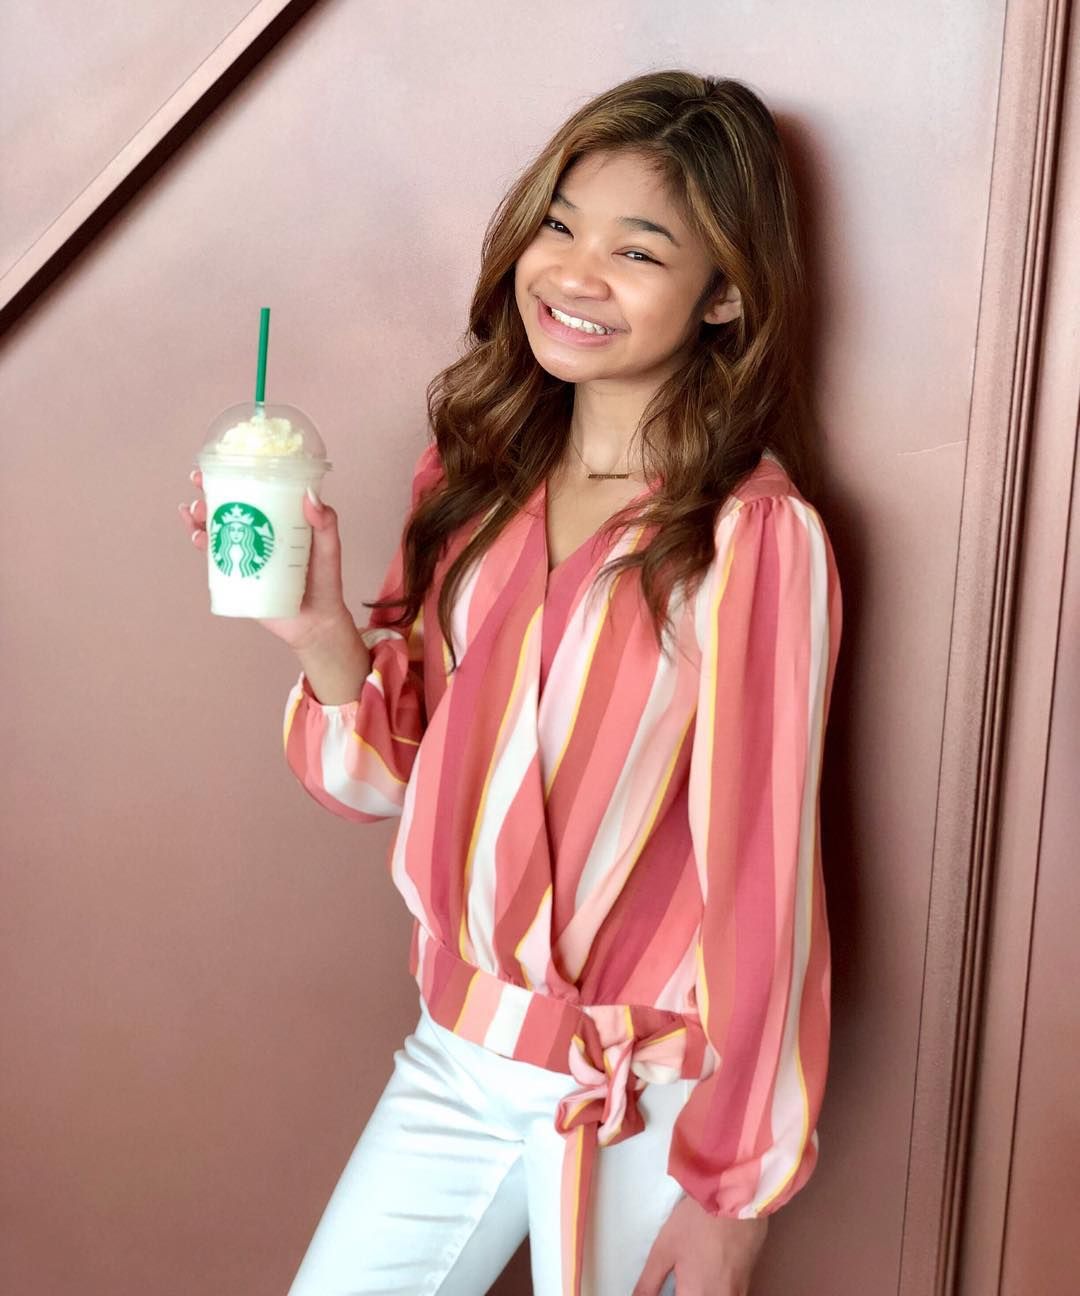 Angelica Hale on Instagram: “Starbucks Saturday.!